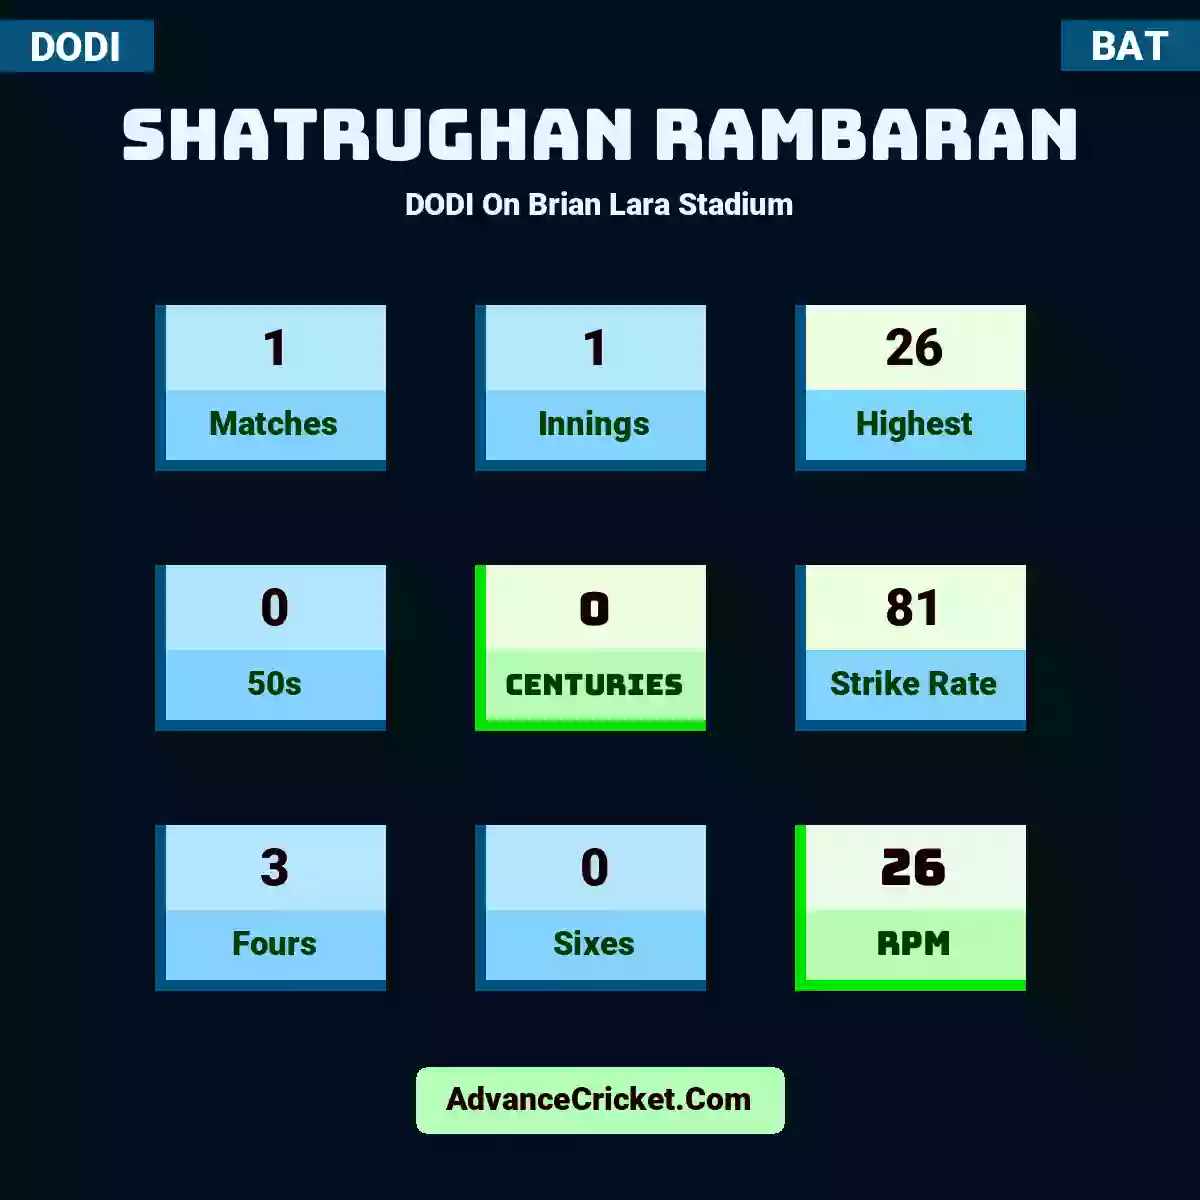 Shatrughan Rambaran DODI  On Brian Lara Stadium, Shatrughan Rambaran played 1 matches, scored 26 runs as highest, 0 half-centuries, and 0 centuries, with a strike rate of 81. s.rambaran hit 3 fours and 0 sixes, with an RPM of 26.